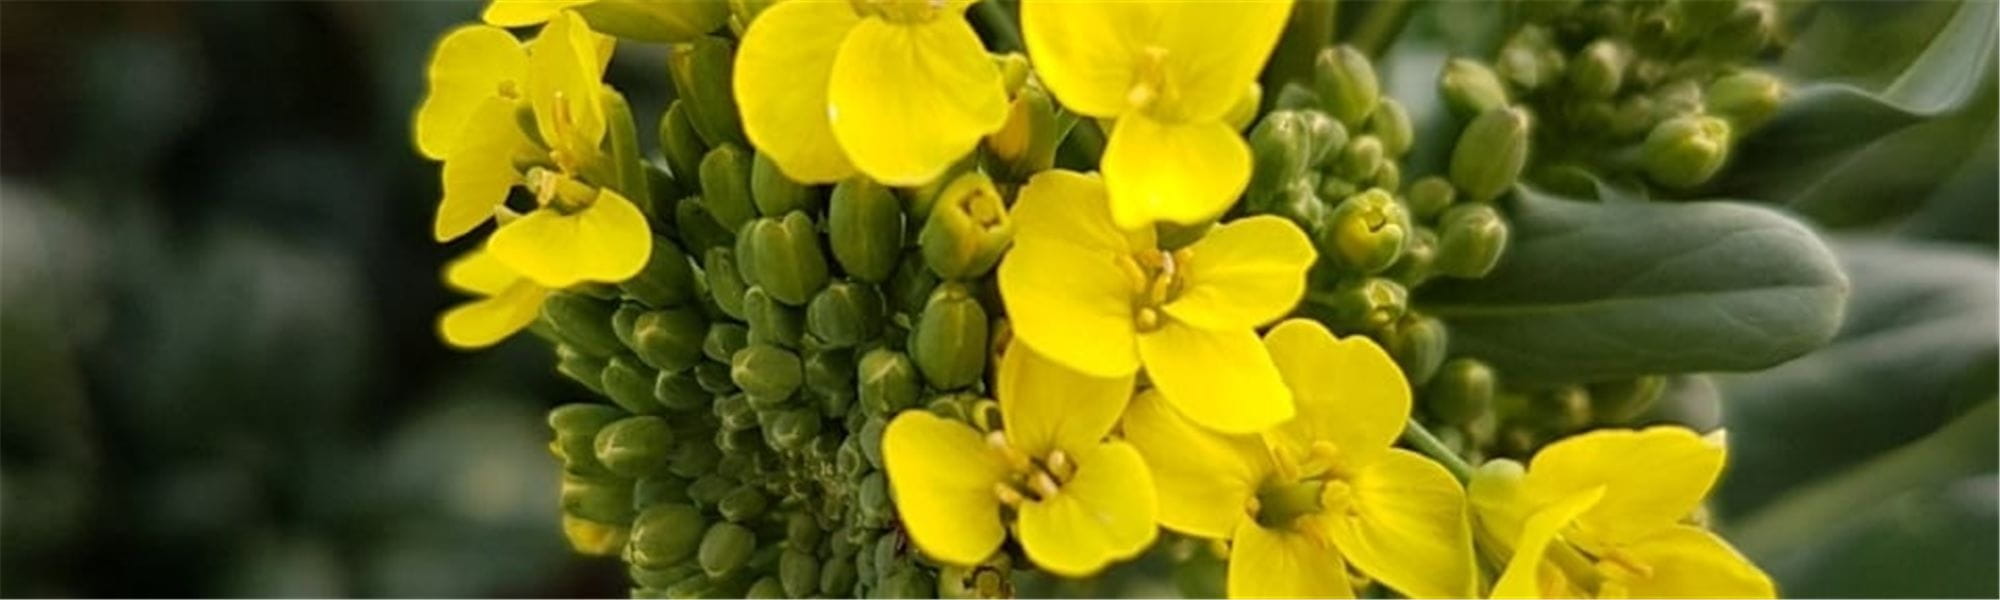 Flowering brocoli